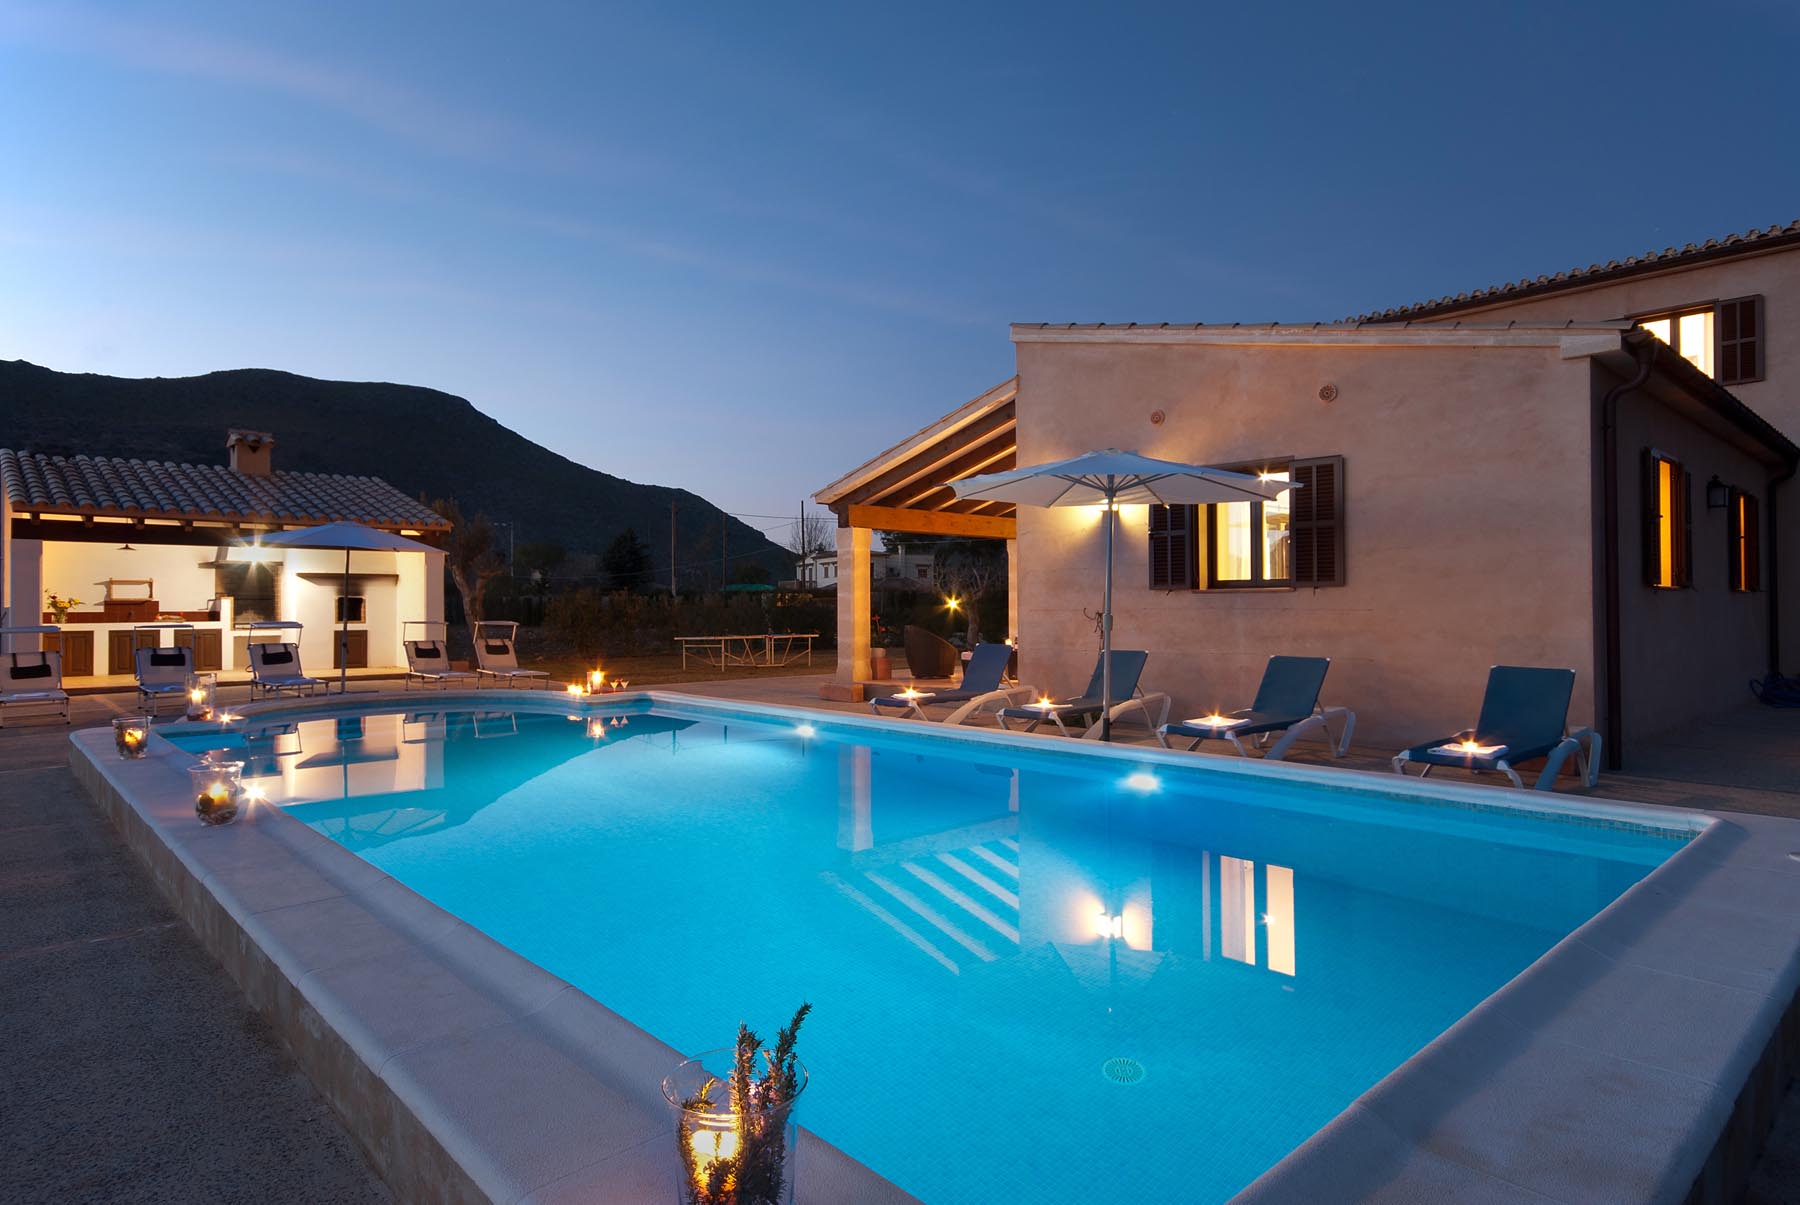 La Vinya is a fantastic 5 bedroom villa with heated pool in walking distance of Puerto Pollensa